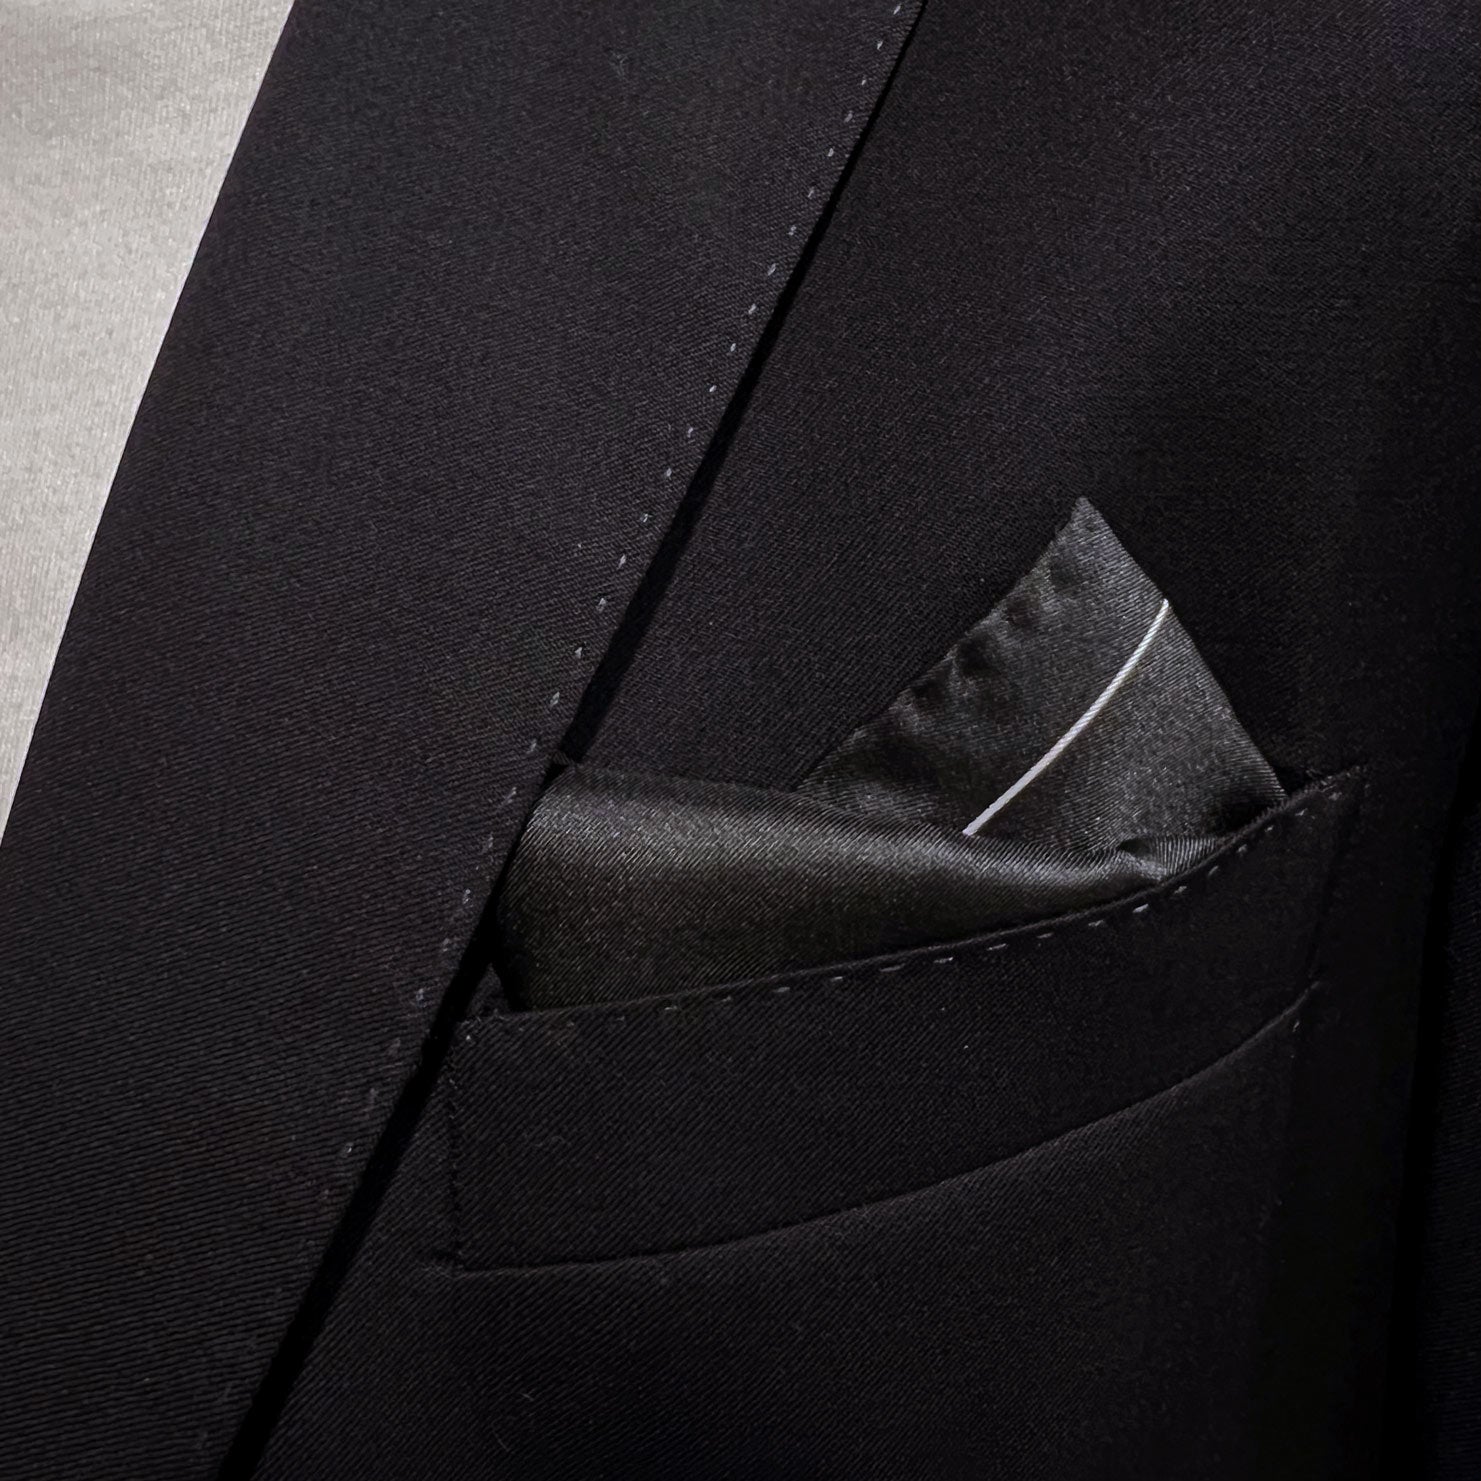 Close-up of black 'Chaplin' silk pocket square in breast pocket of dark suit jacket.